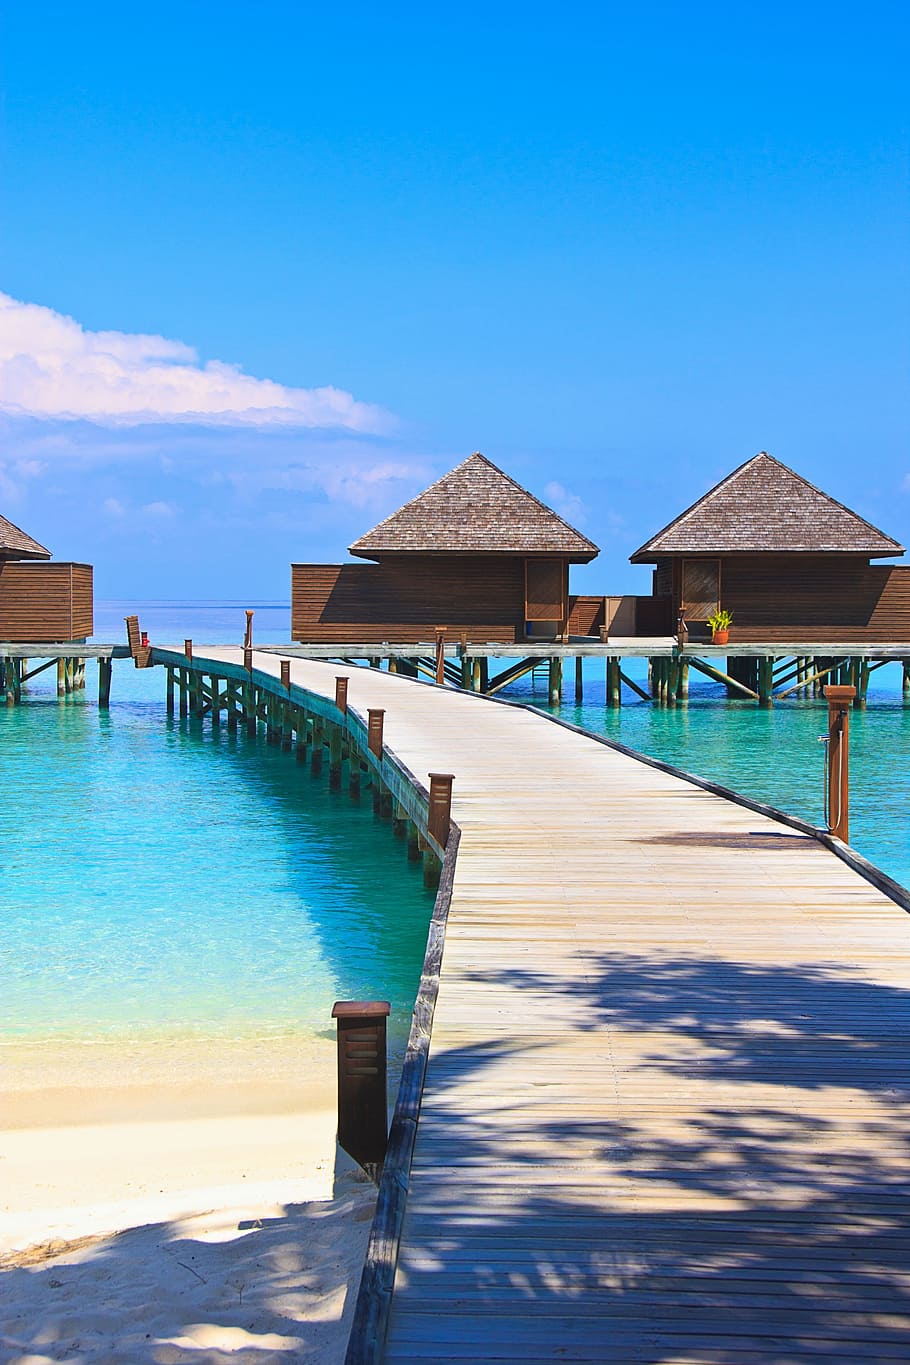 casas de campo maldivas, ilha veligandu, maldivas, oceano, ilha, lagoa, turismo, relaxamento, arquitetura, céu